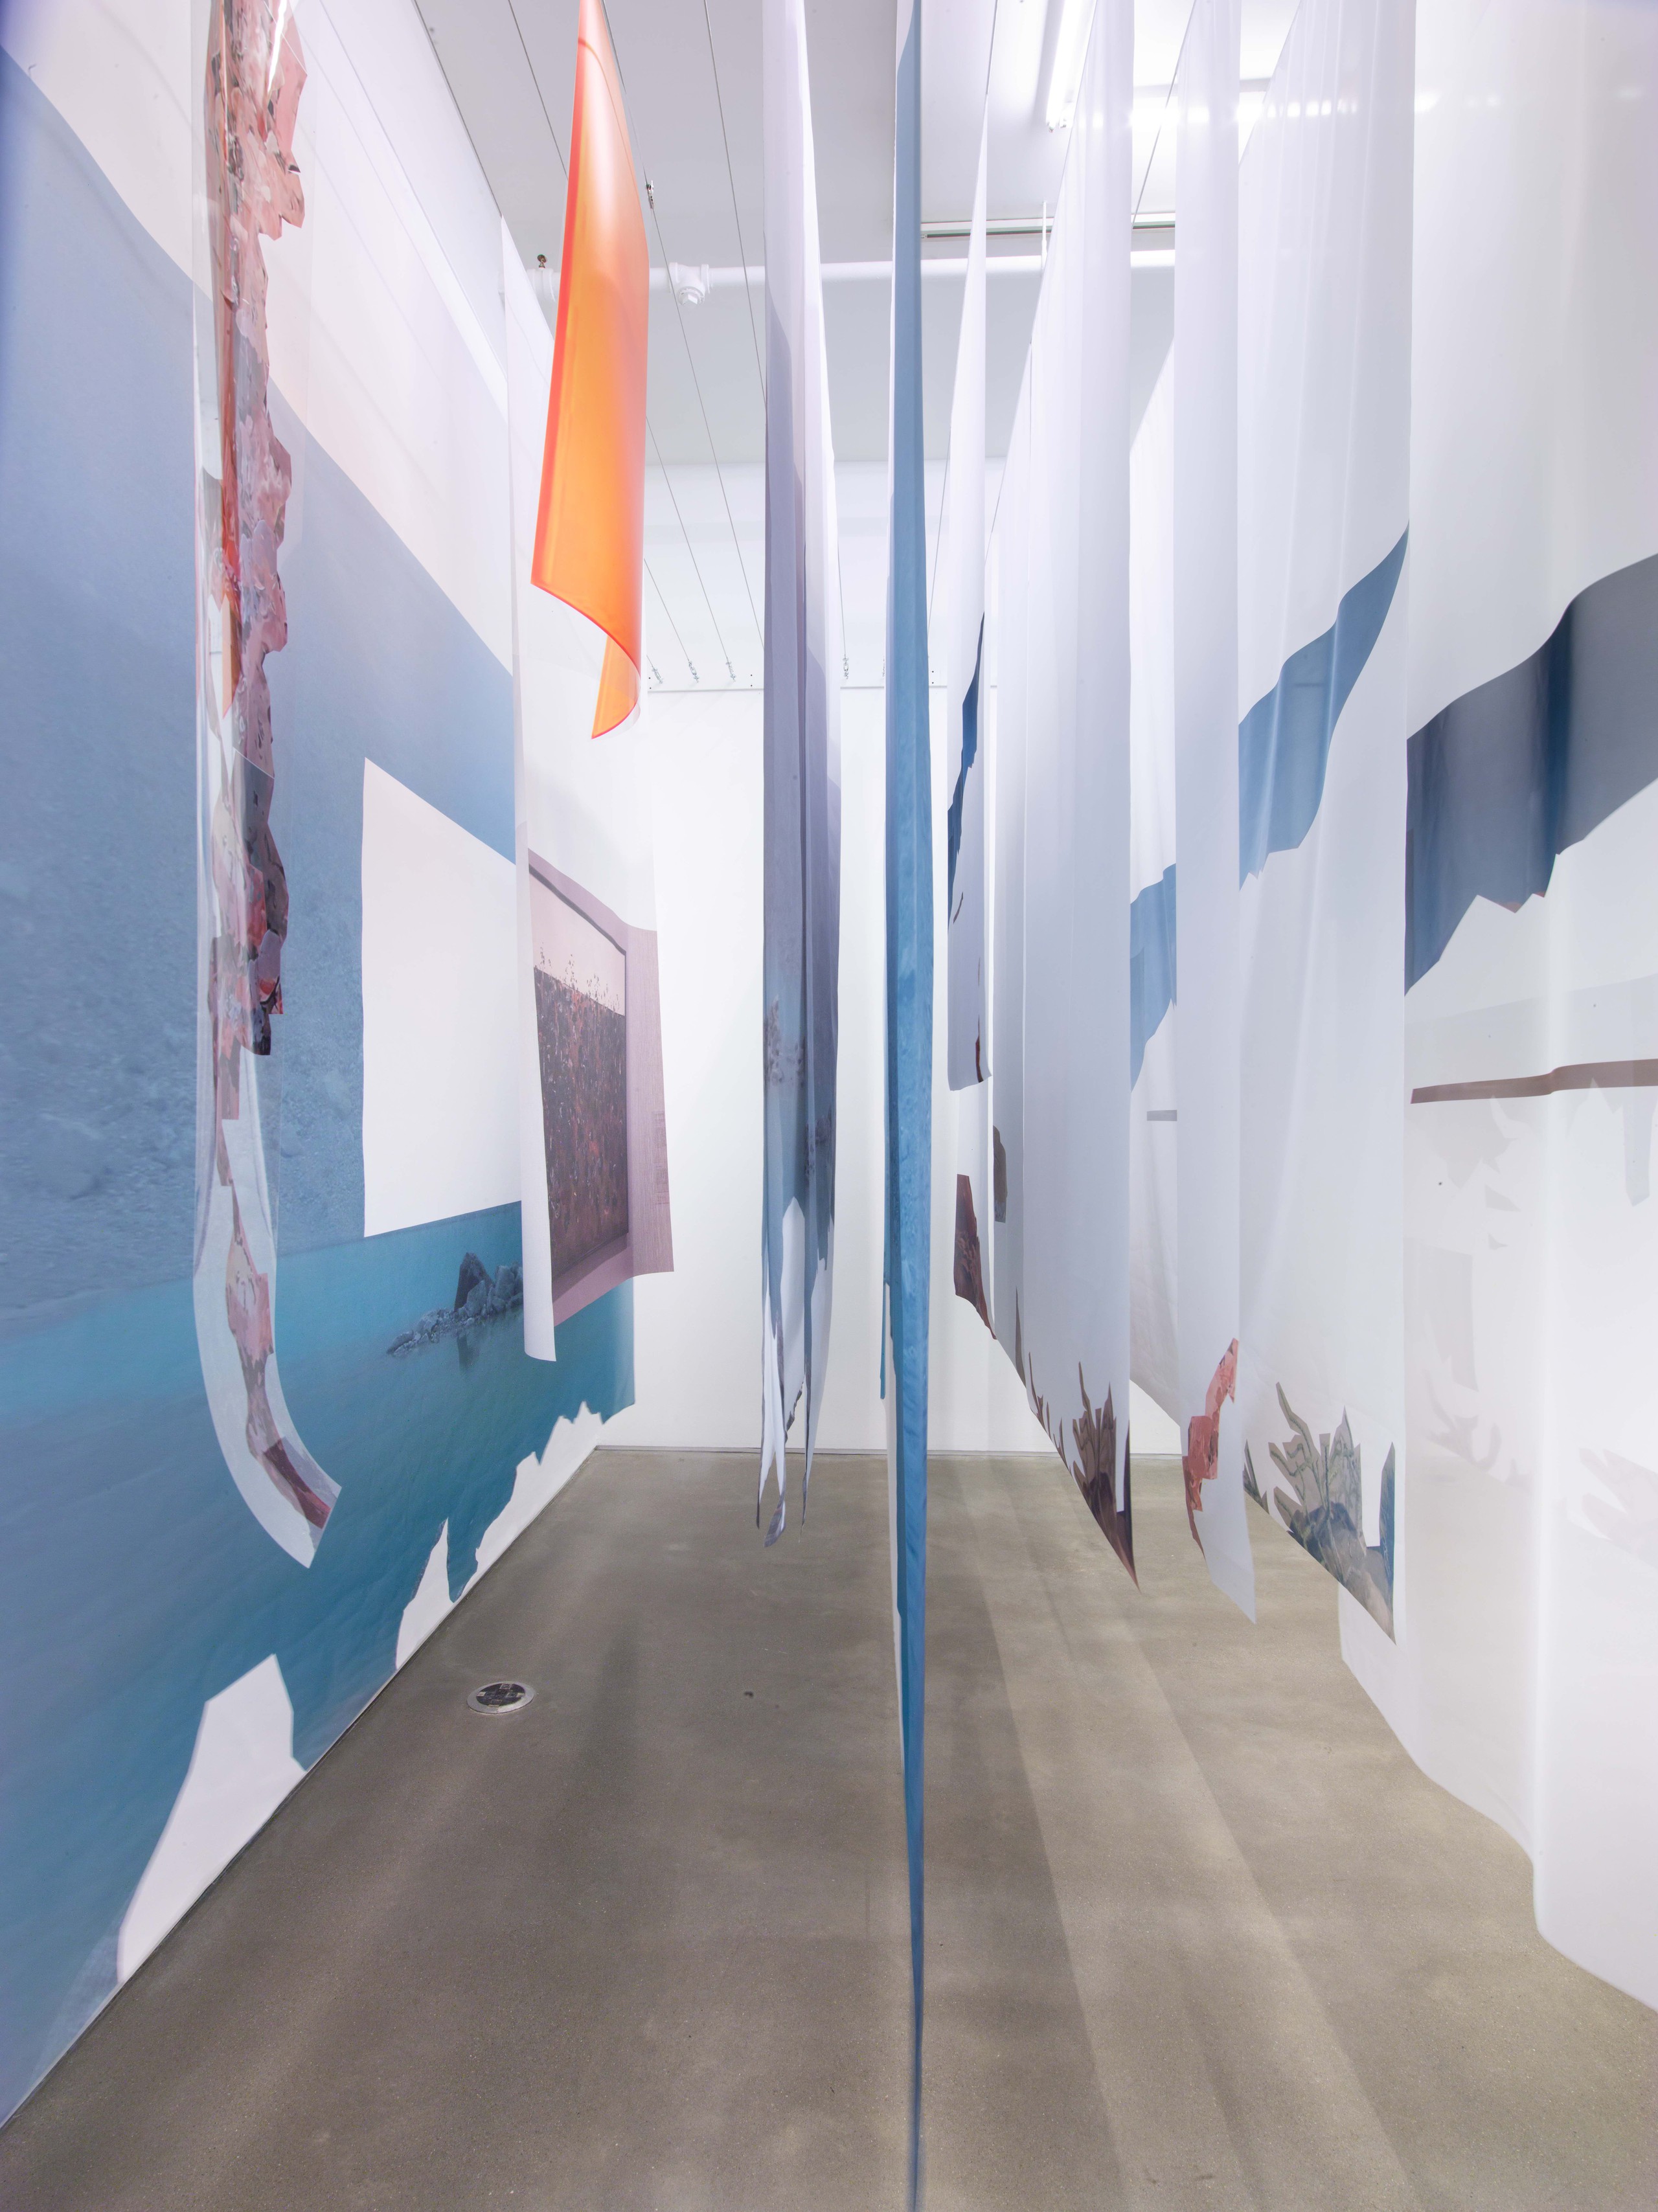 Installation view, borderline aurora borealis, Team Gallery, New York, 2020